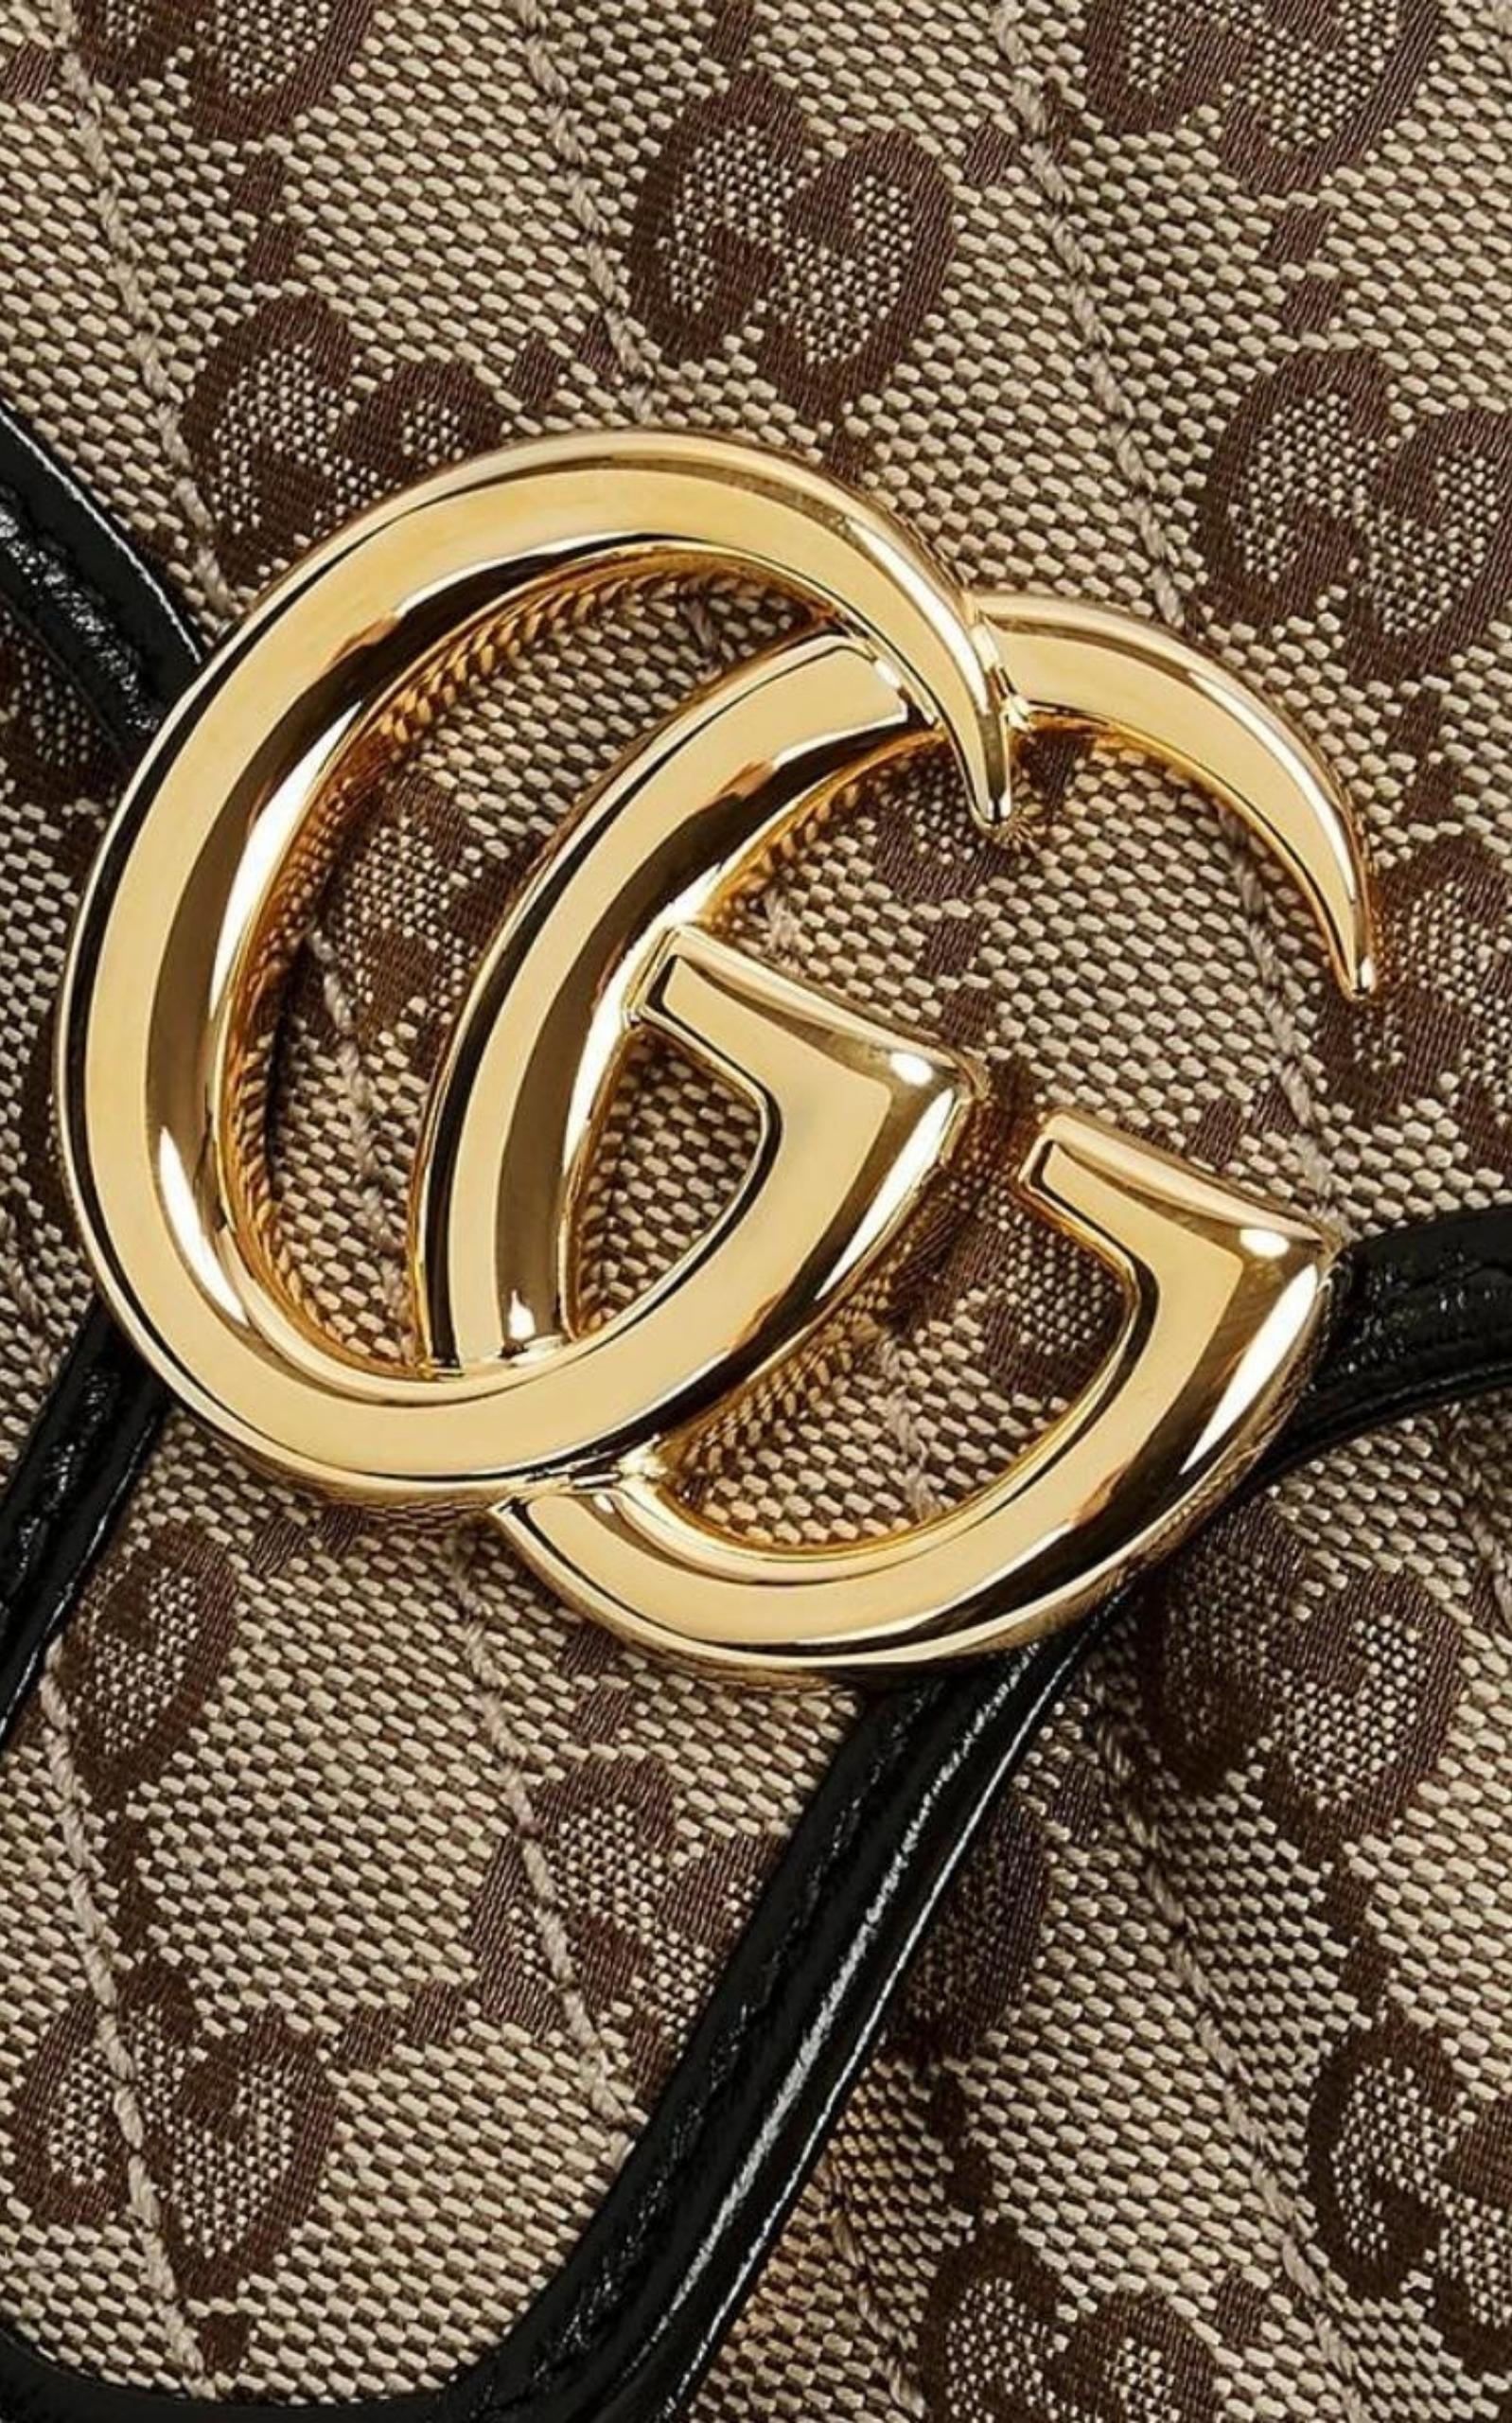 Gucci GG Marmont Matelassé mini bag Black Silver hardware